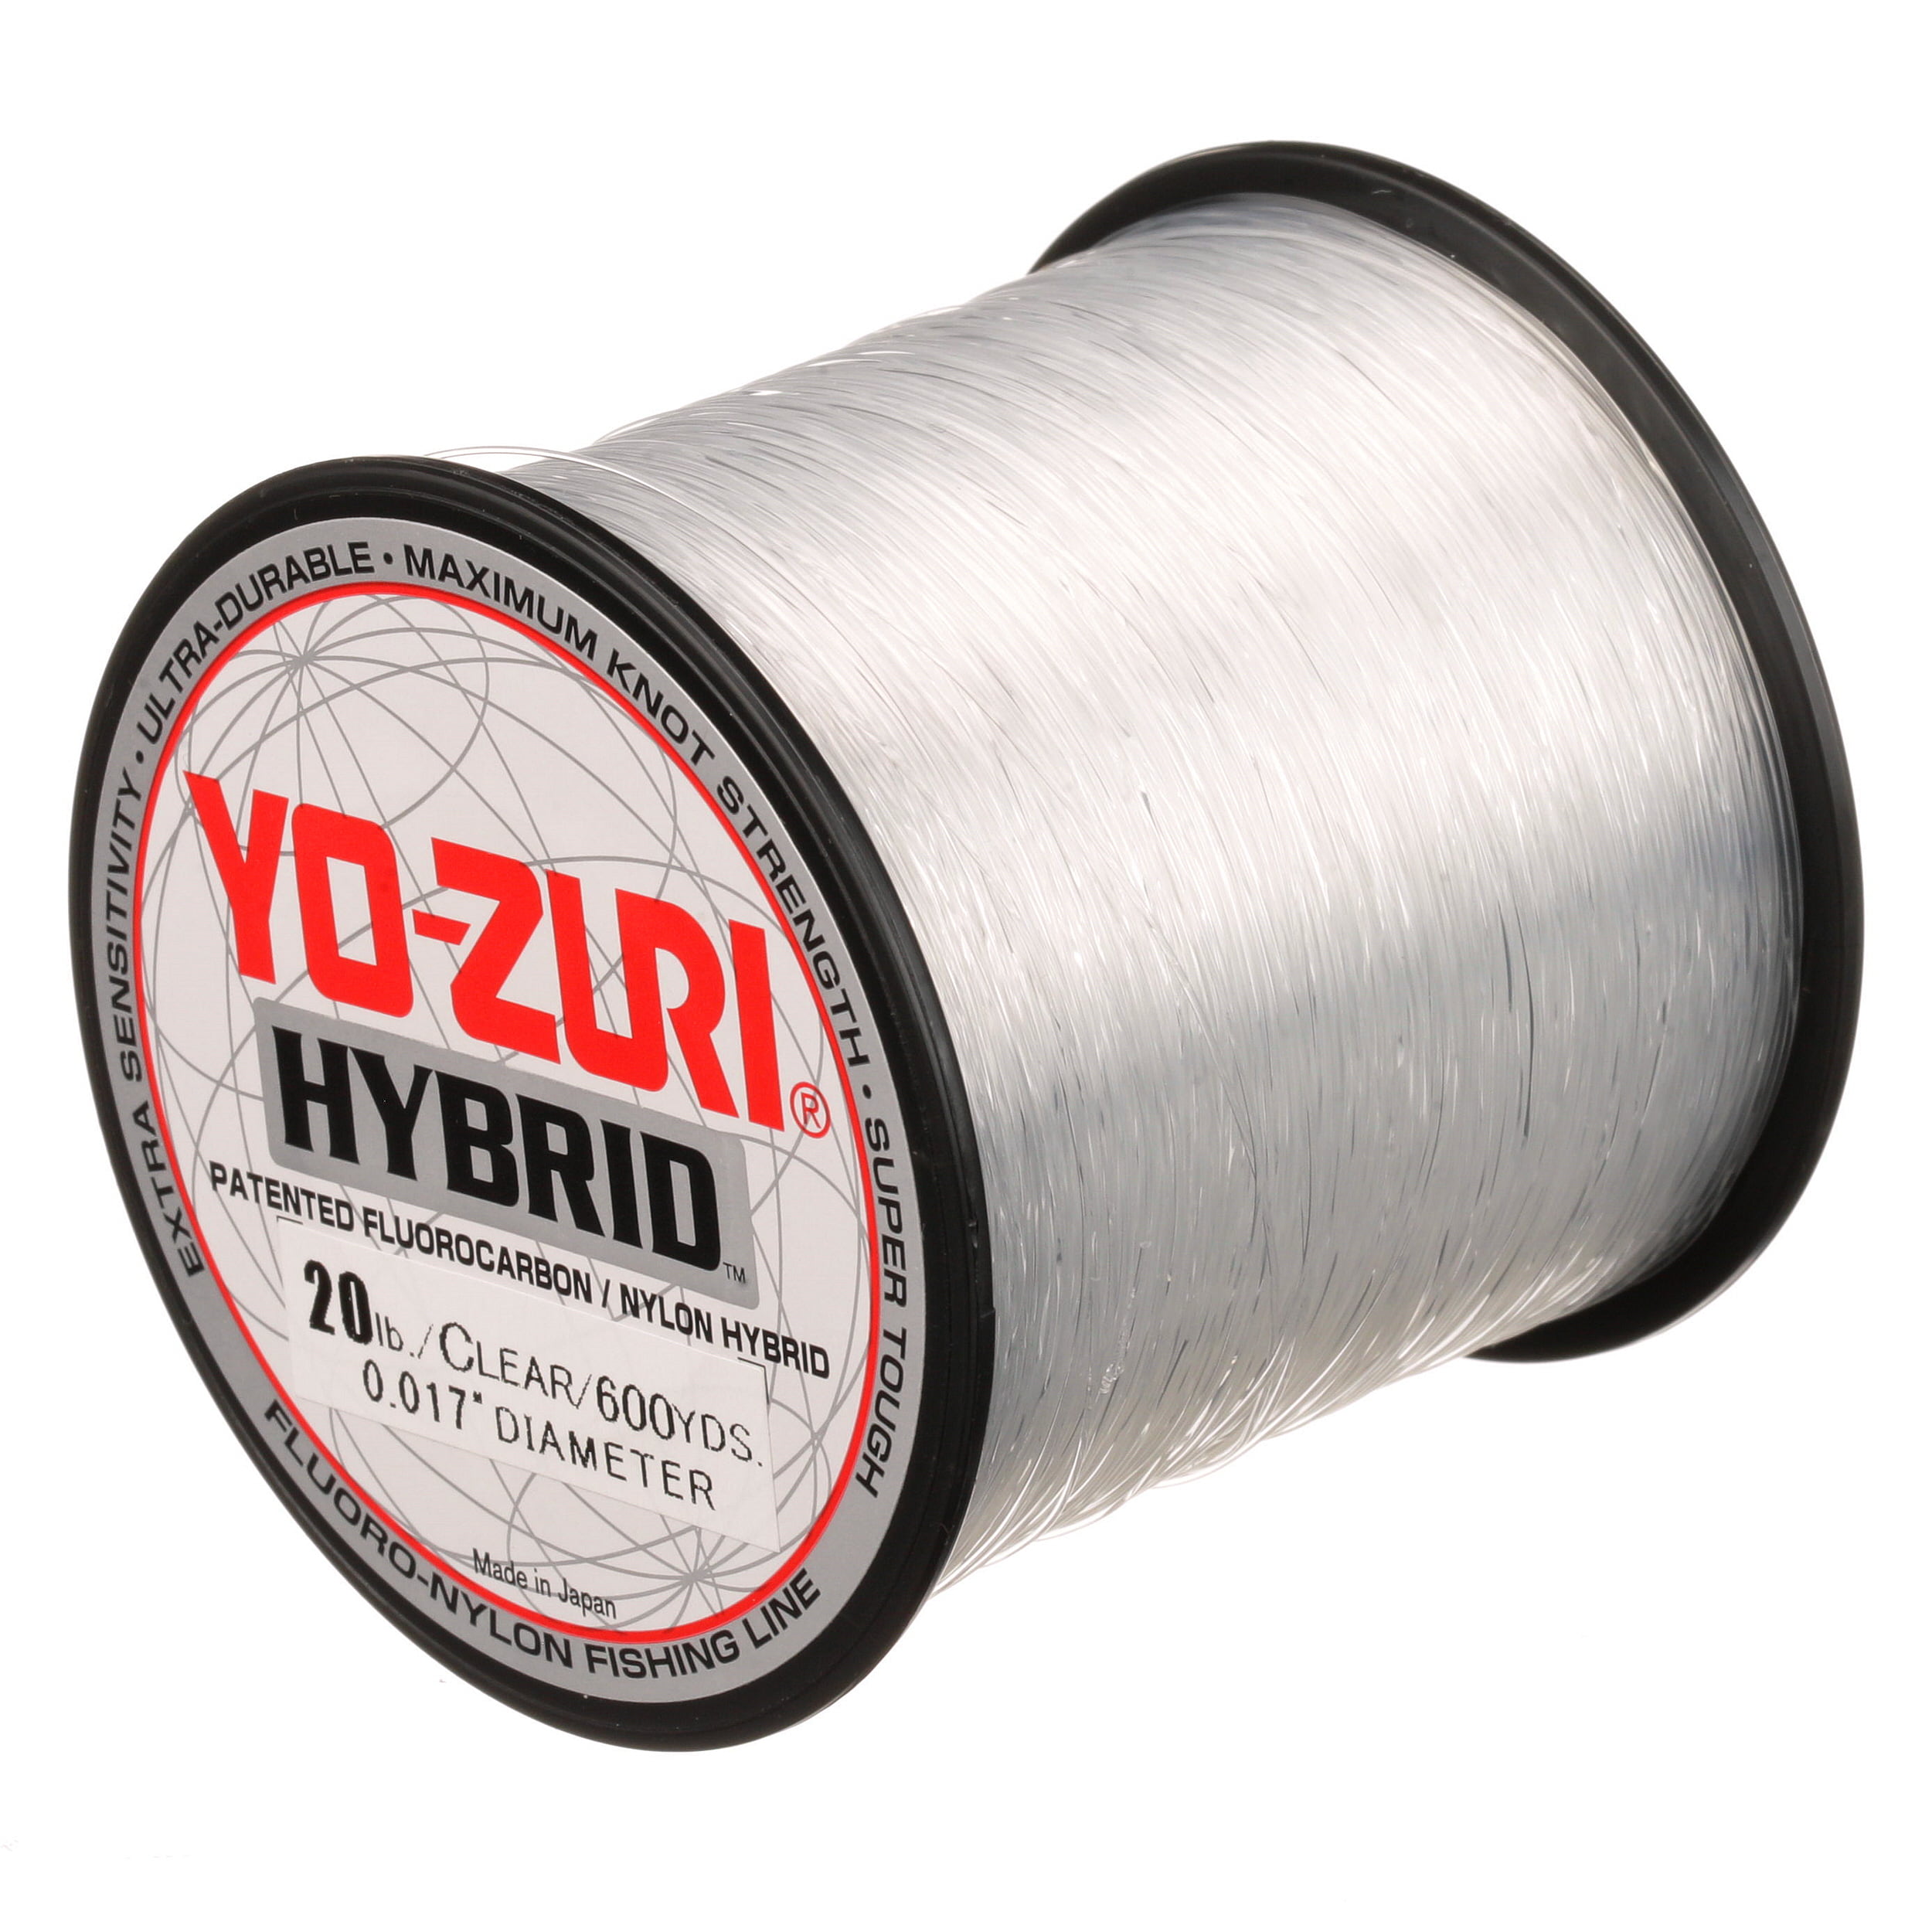 Yo-Zuri Hybrid Fluoro - Yellow - 600yds - 10Lb Test - TackleDirect